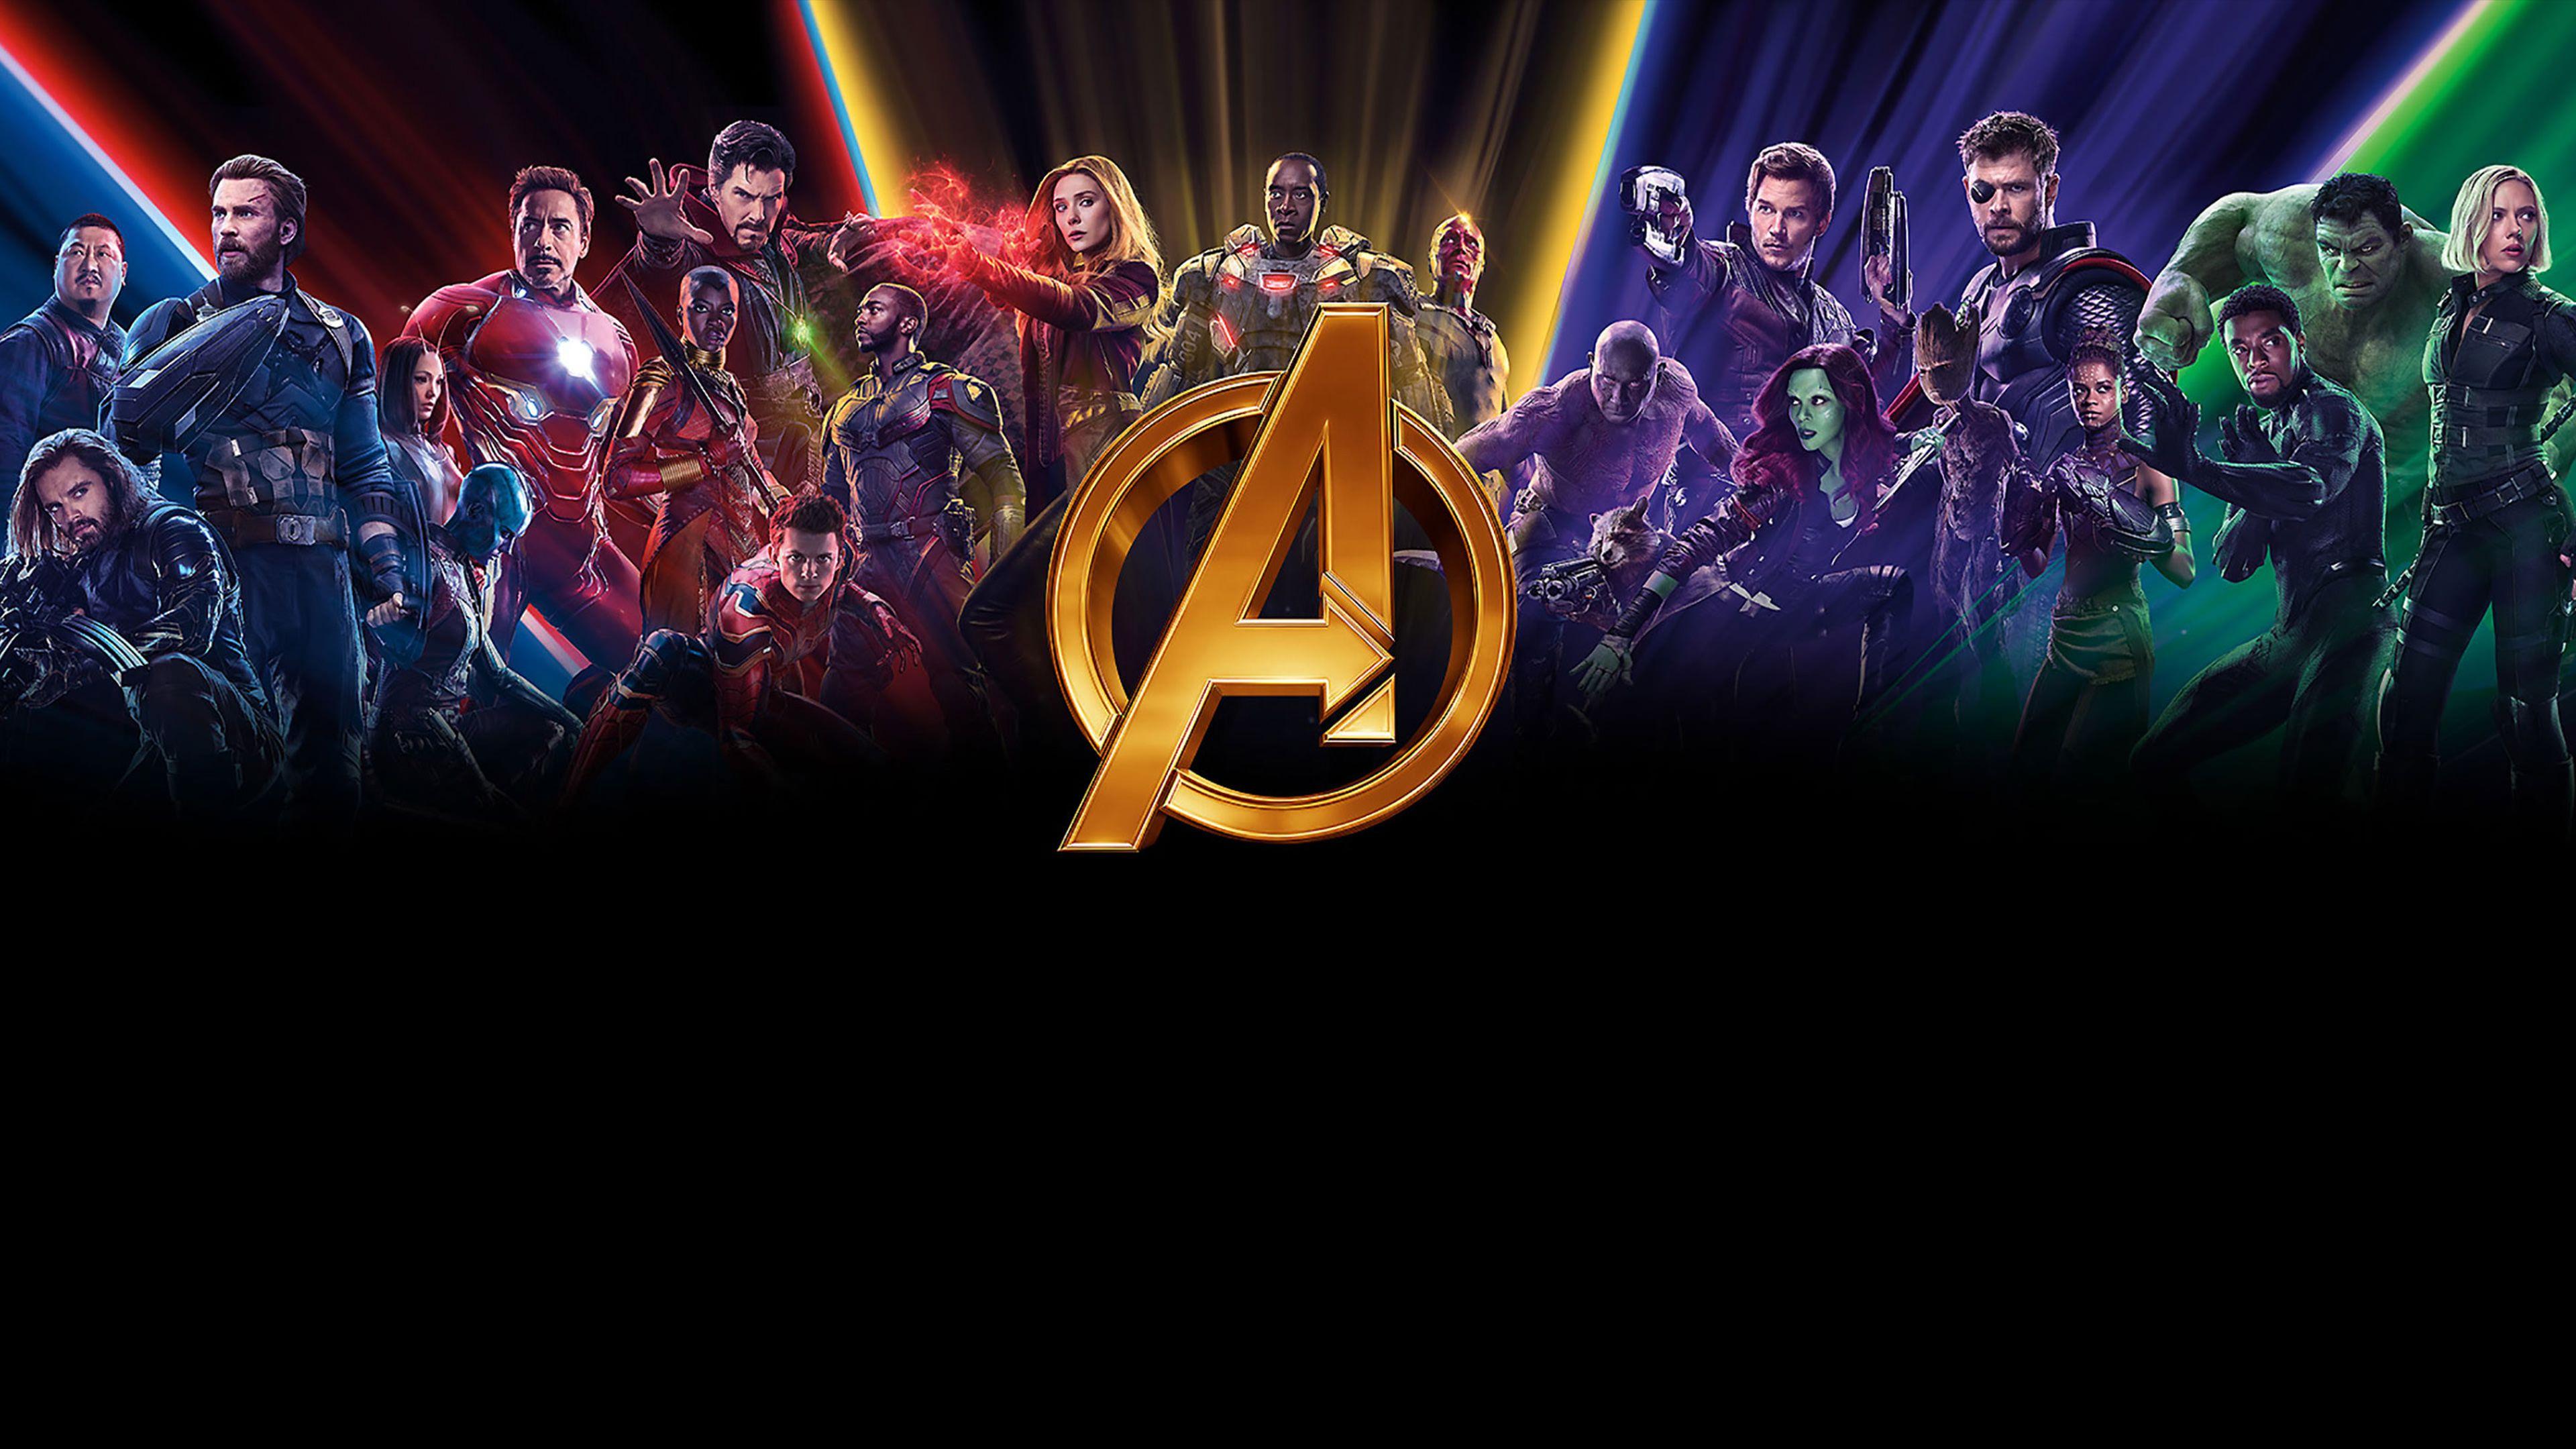 Wallpaper 4k Avengers Infinity War 4k 2018 Movies Wallpaper, 4k